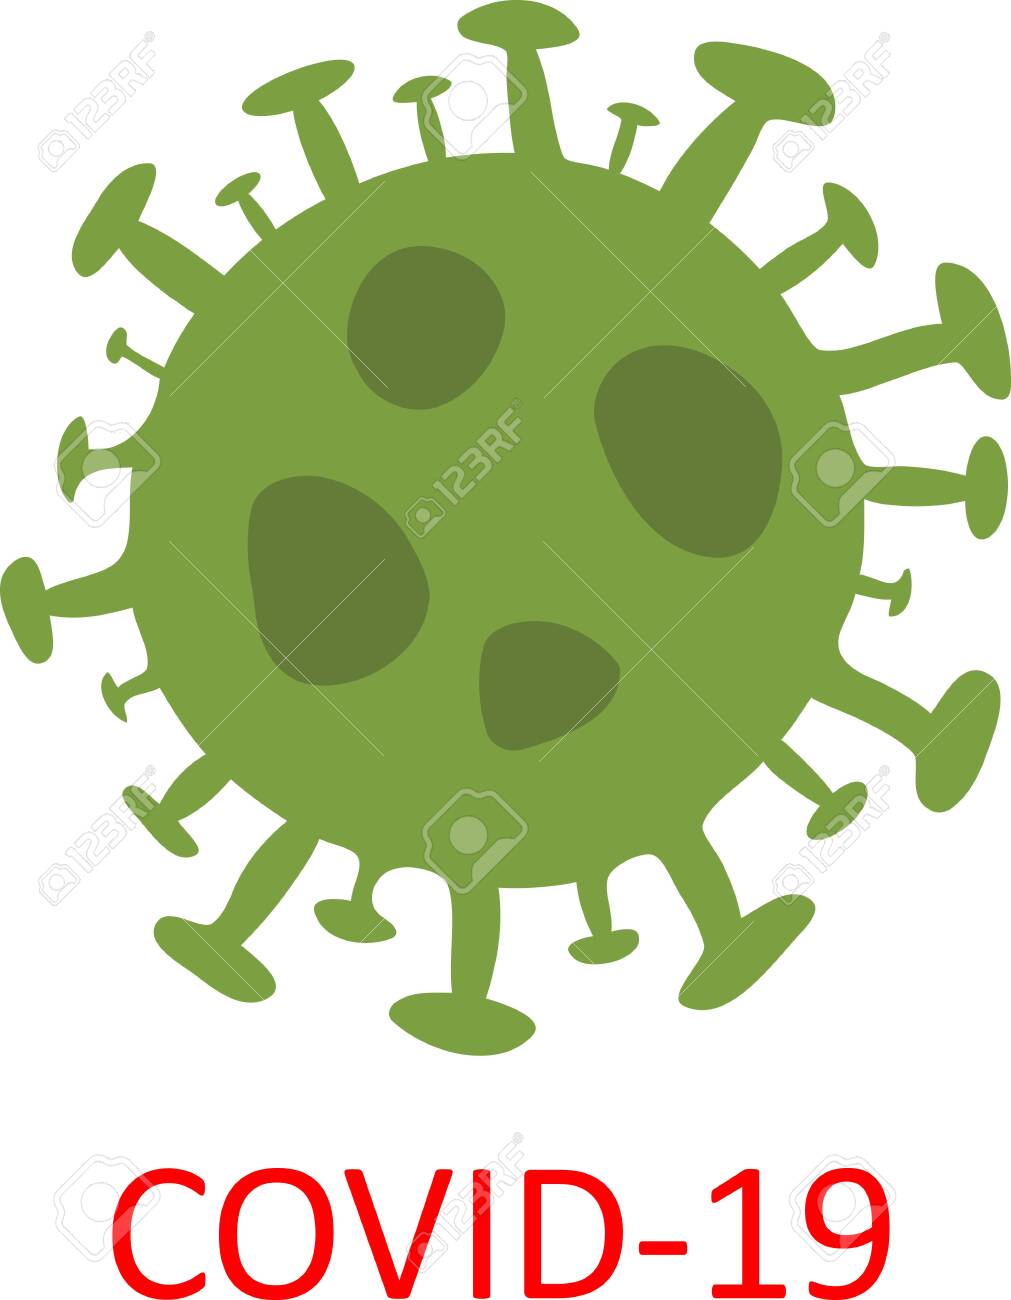 Covid 19 Coronavirus clipart